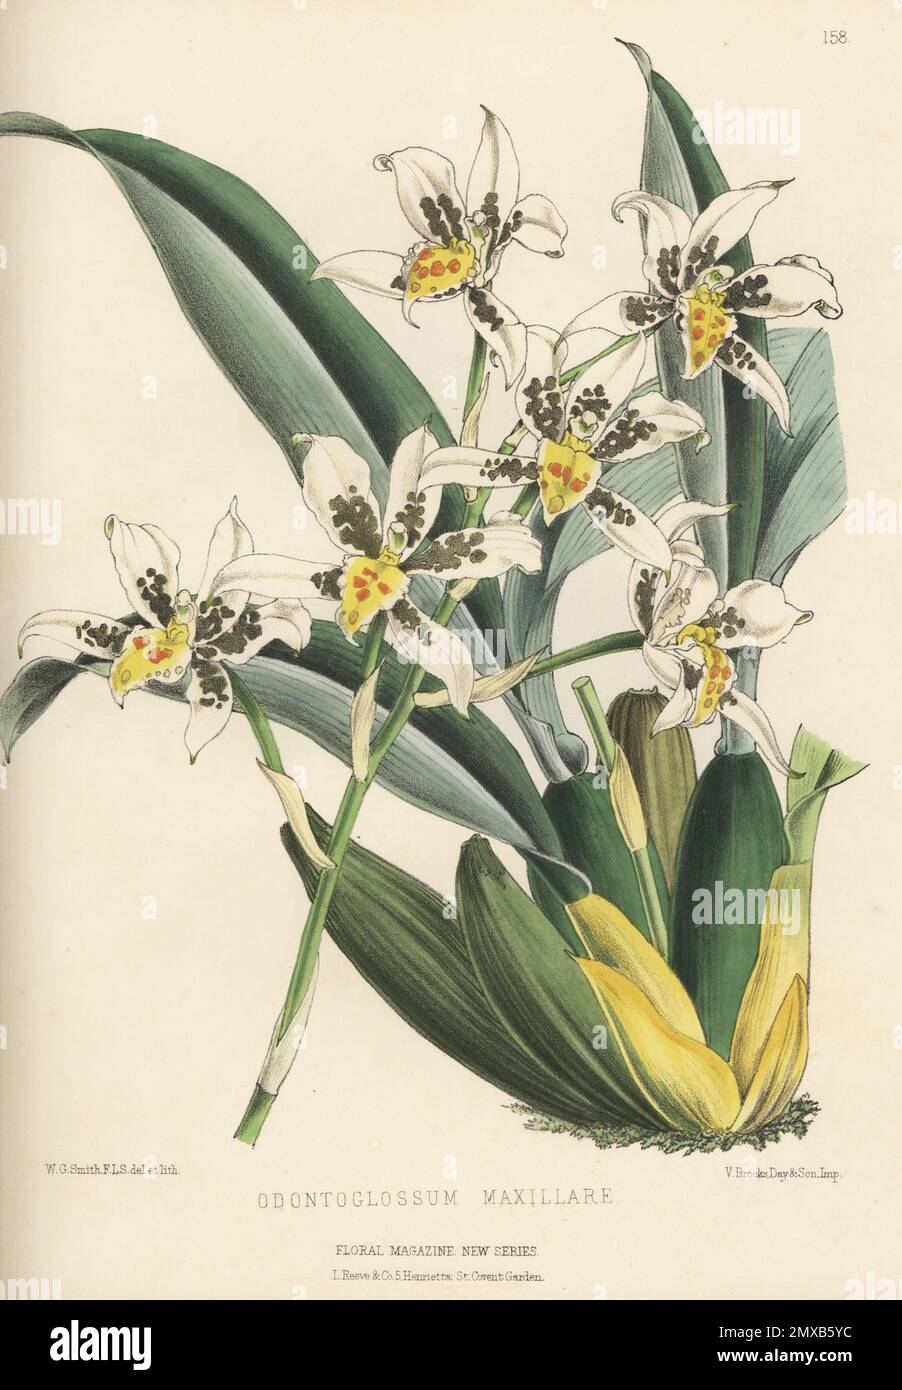 Lámina Botánica Orquídea, siglo XIX - Almacén Alquián Hóptimo